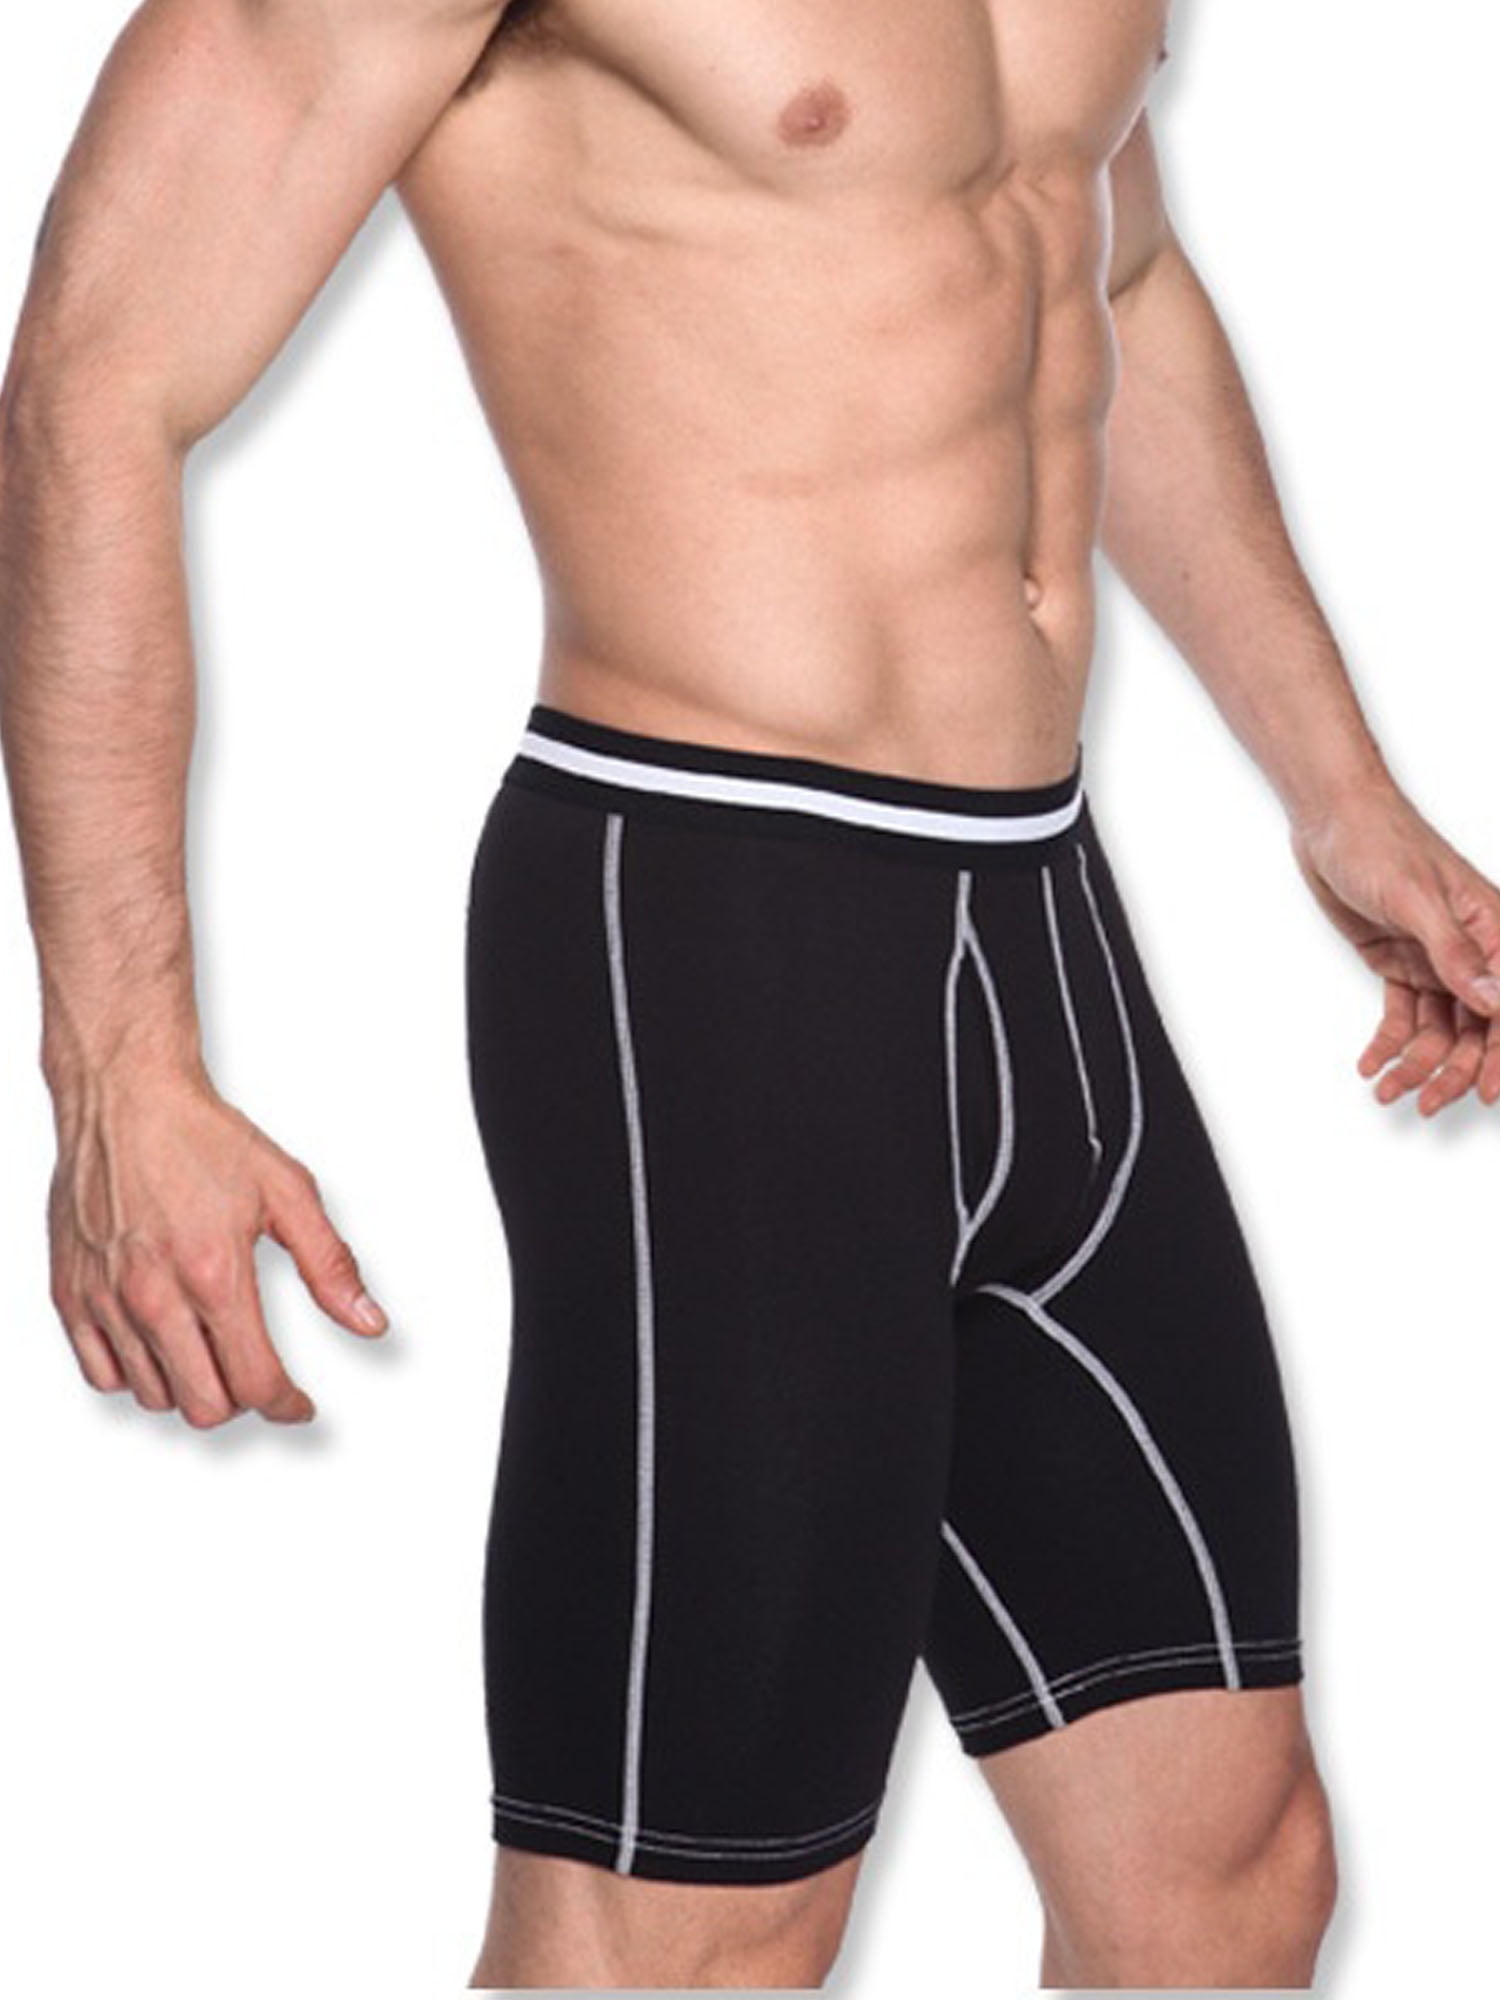 OCEAN-STORE Mens Underwear Boxer Briefs Cotton Long Leg Stretch Underwear Open-Fly Boxers for Men 